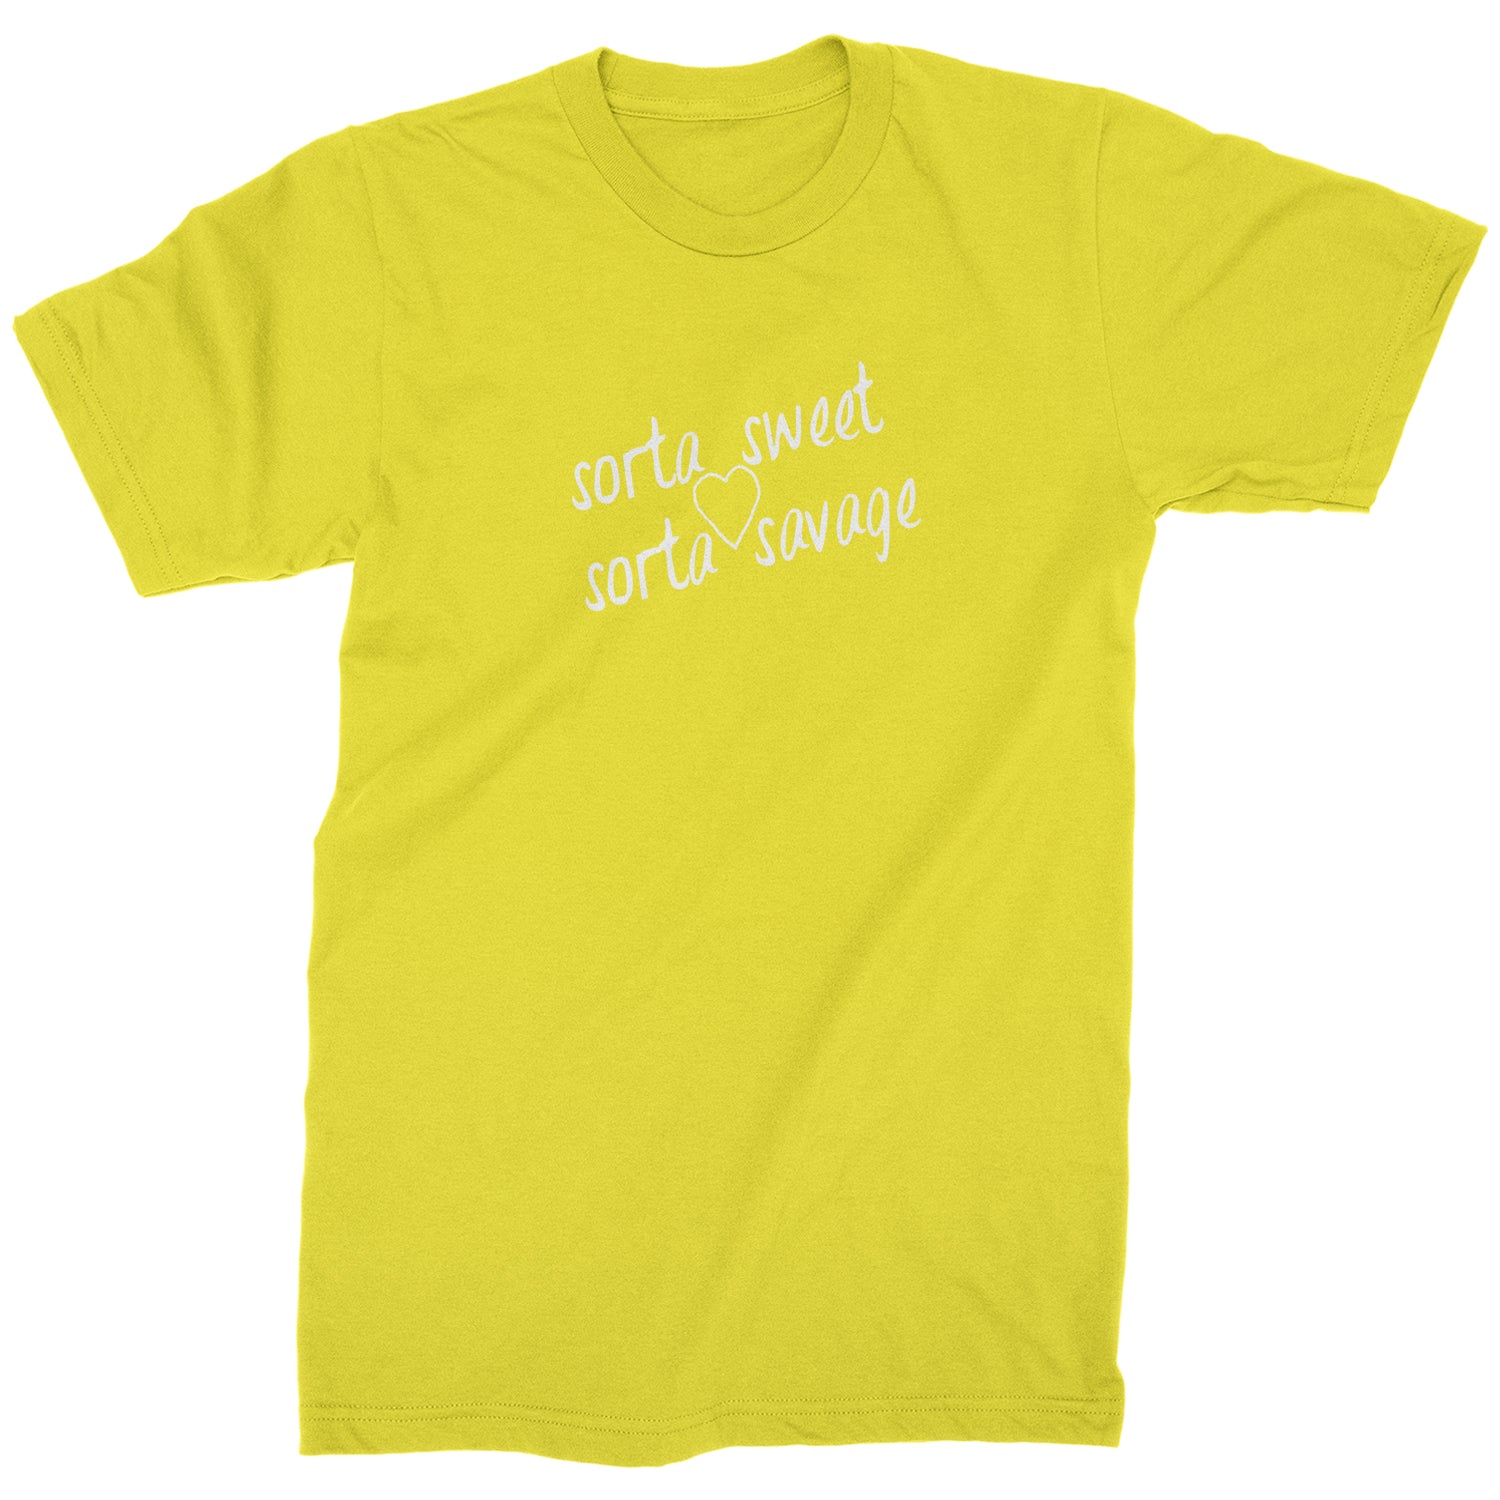 Sorta Sweet Sorta Savage Mens T-shirt savage by Expression Tees